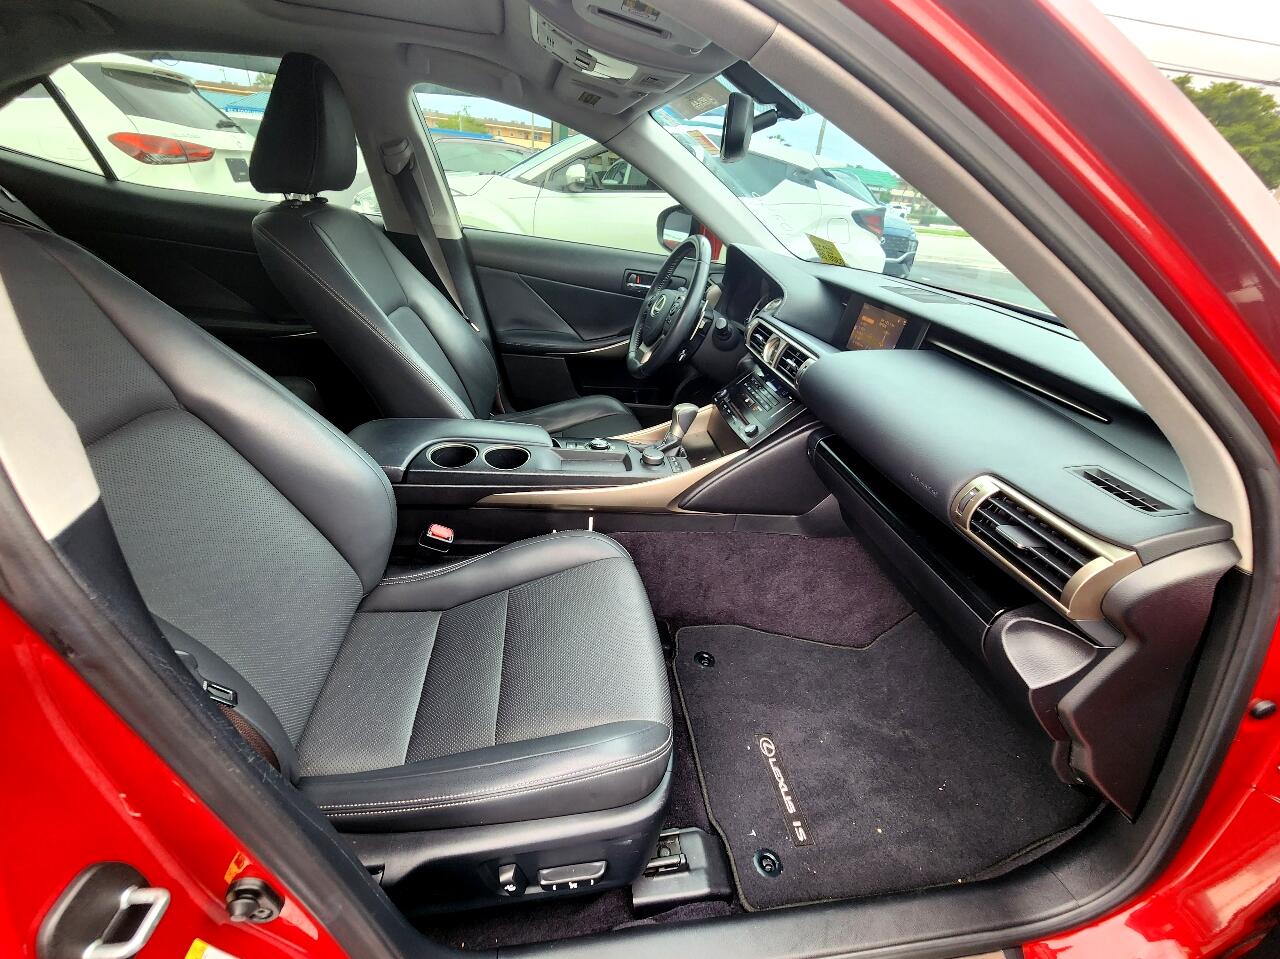 2014 LEXUS IS Sedan - $19,999